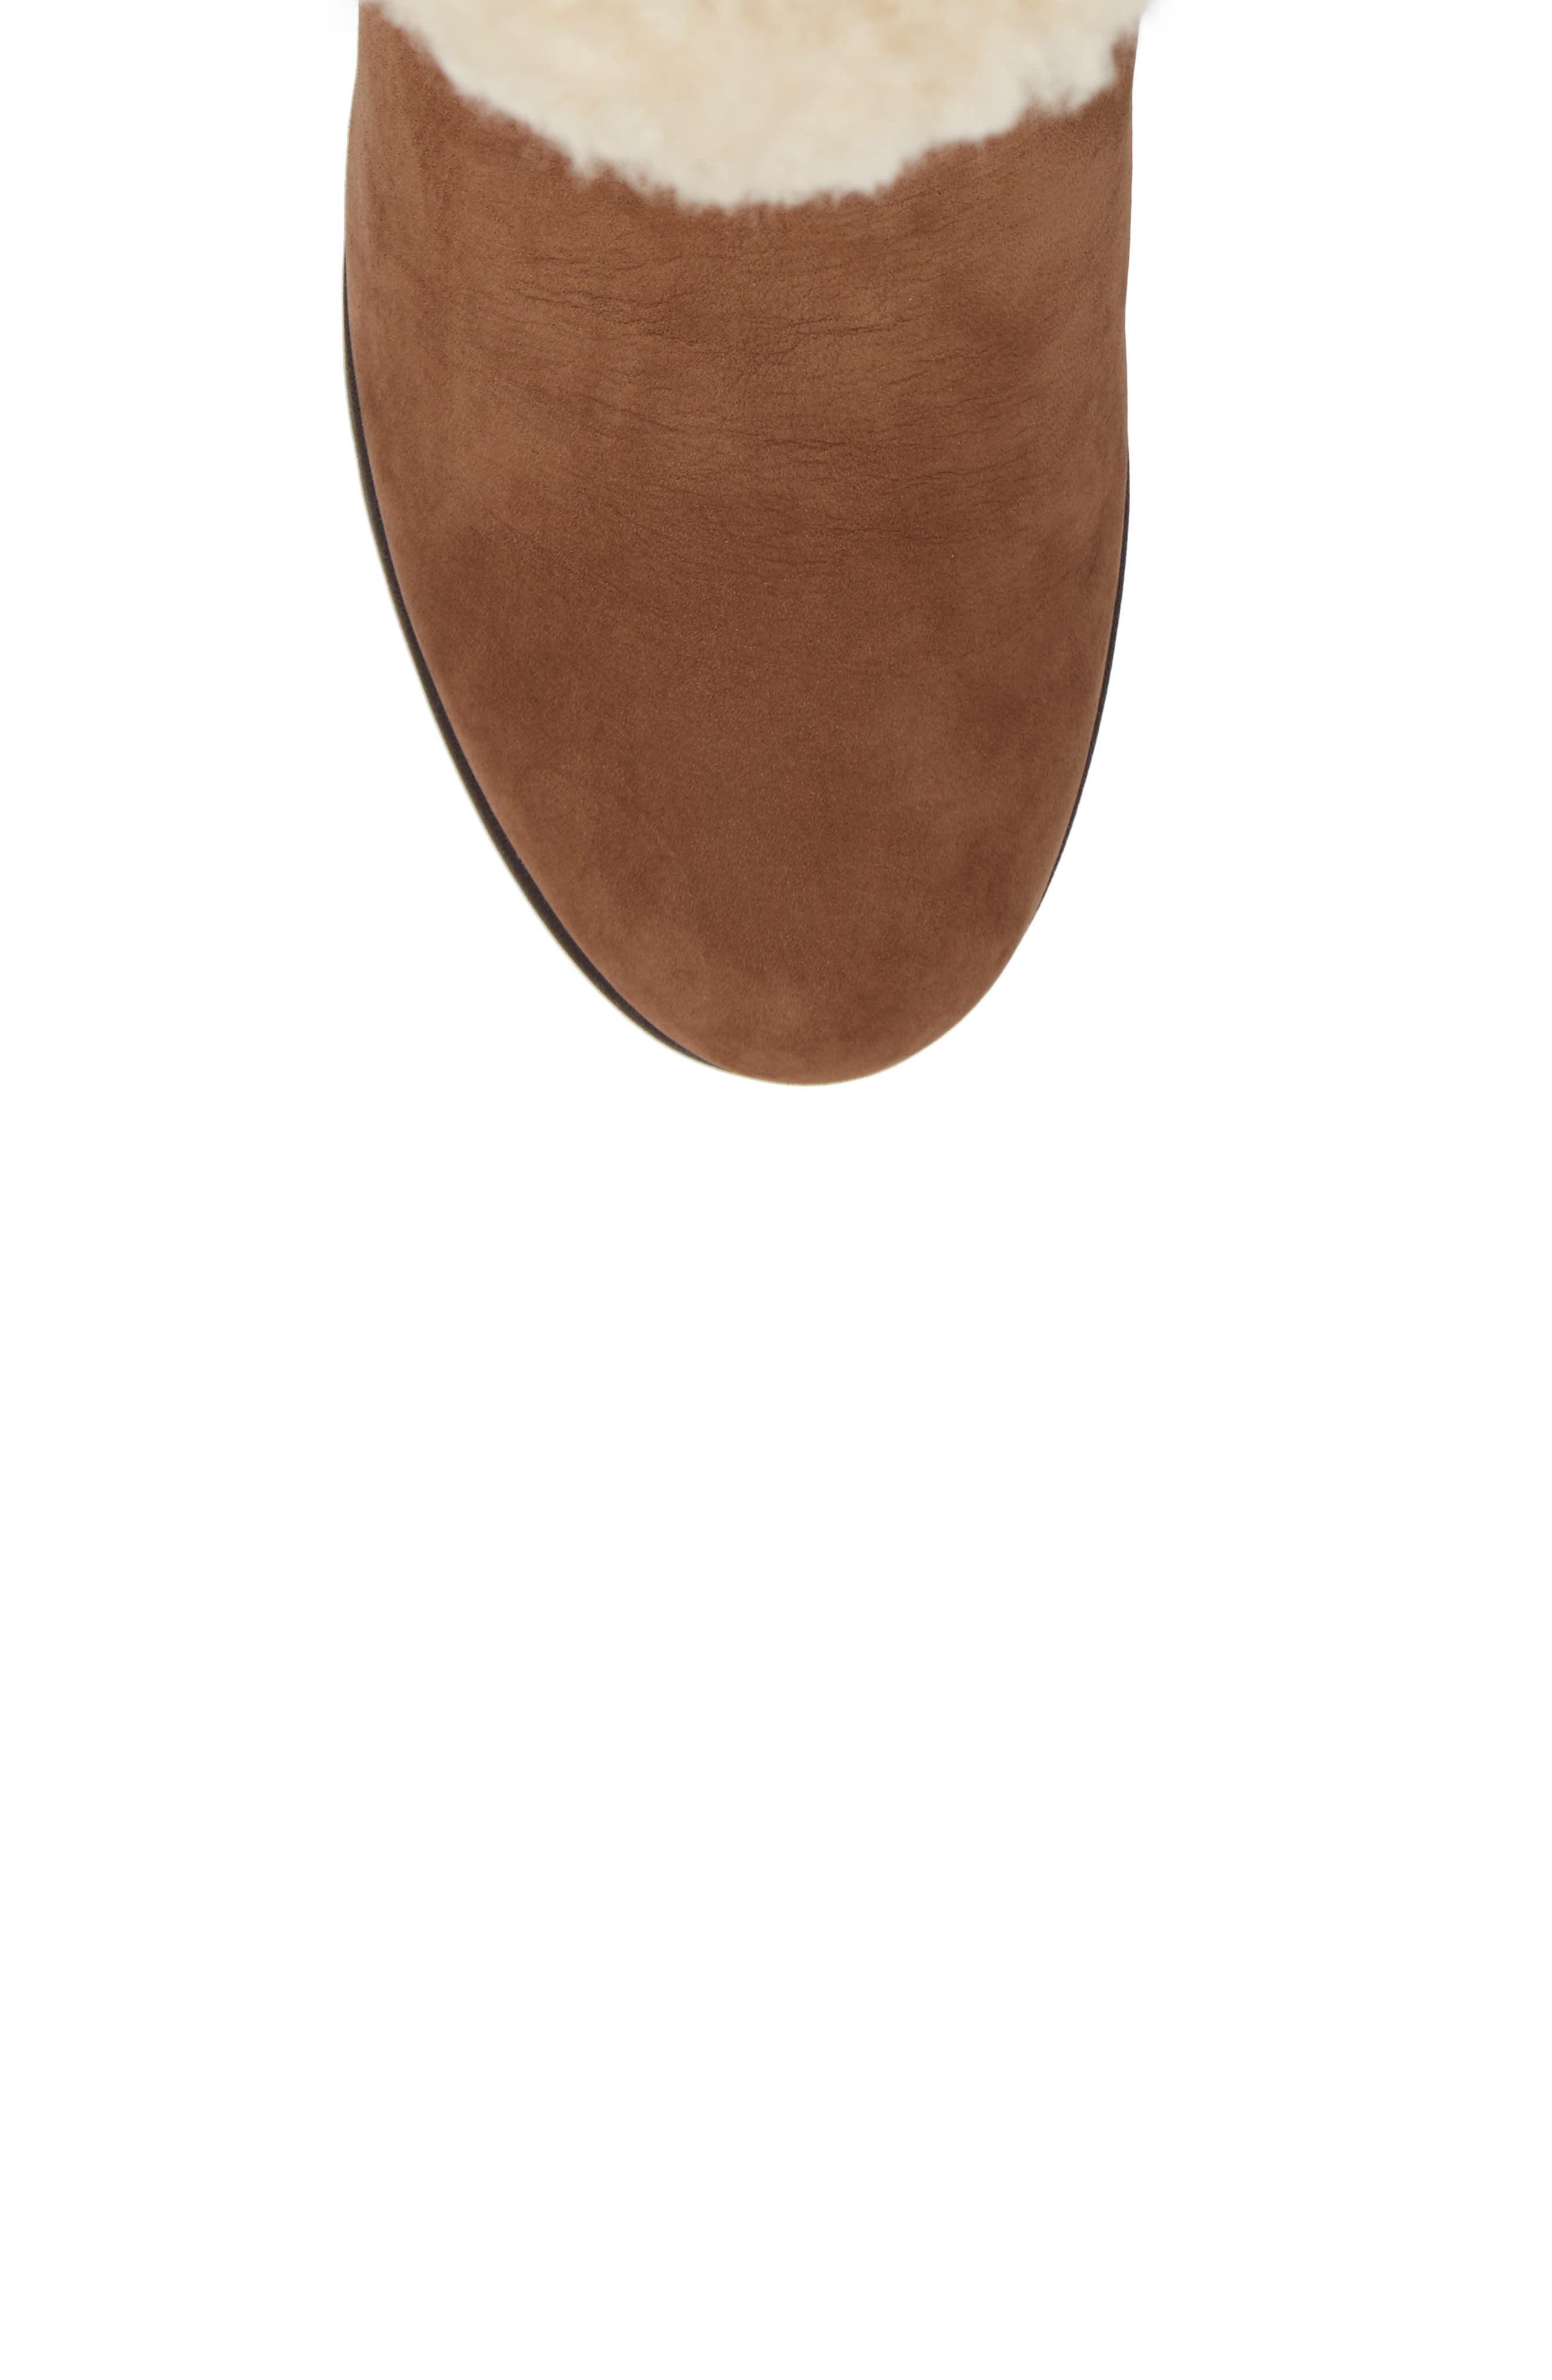 edelina uggpure leather & suede wedge boot